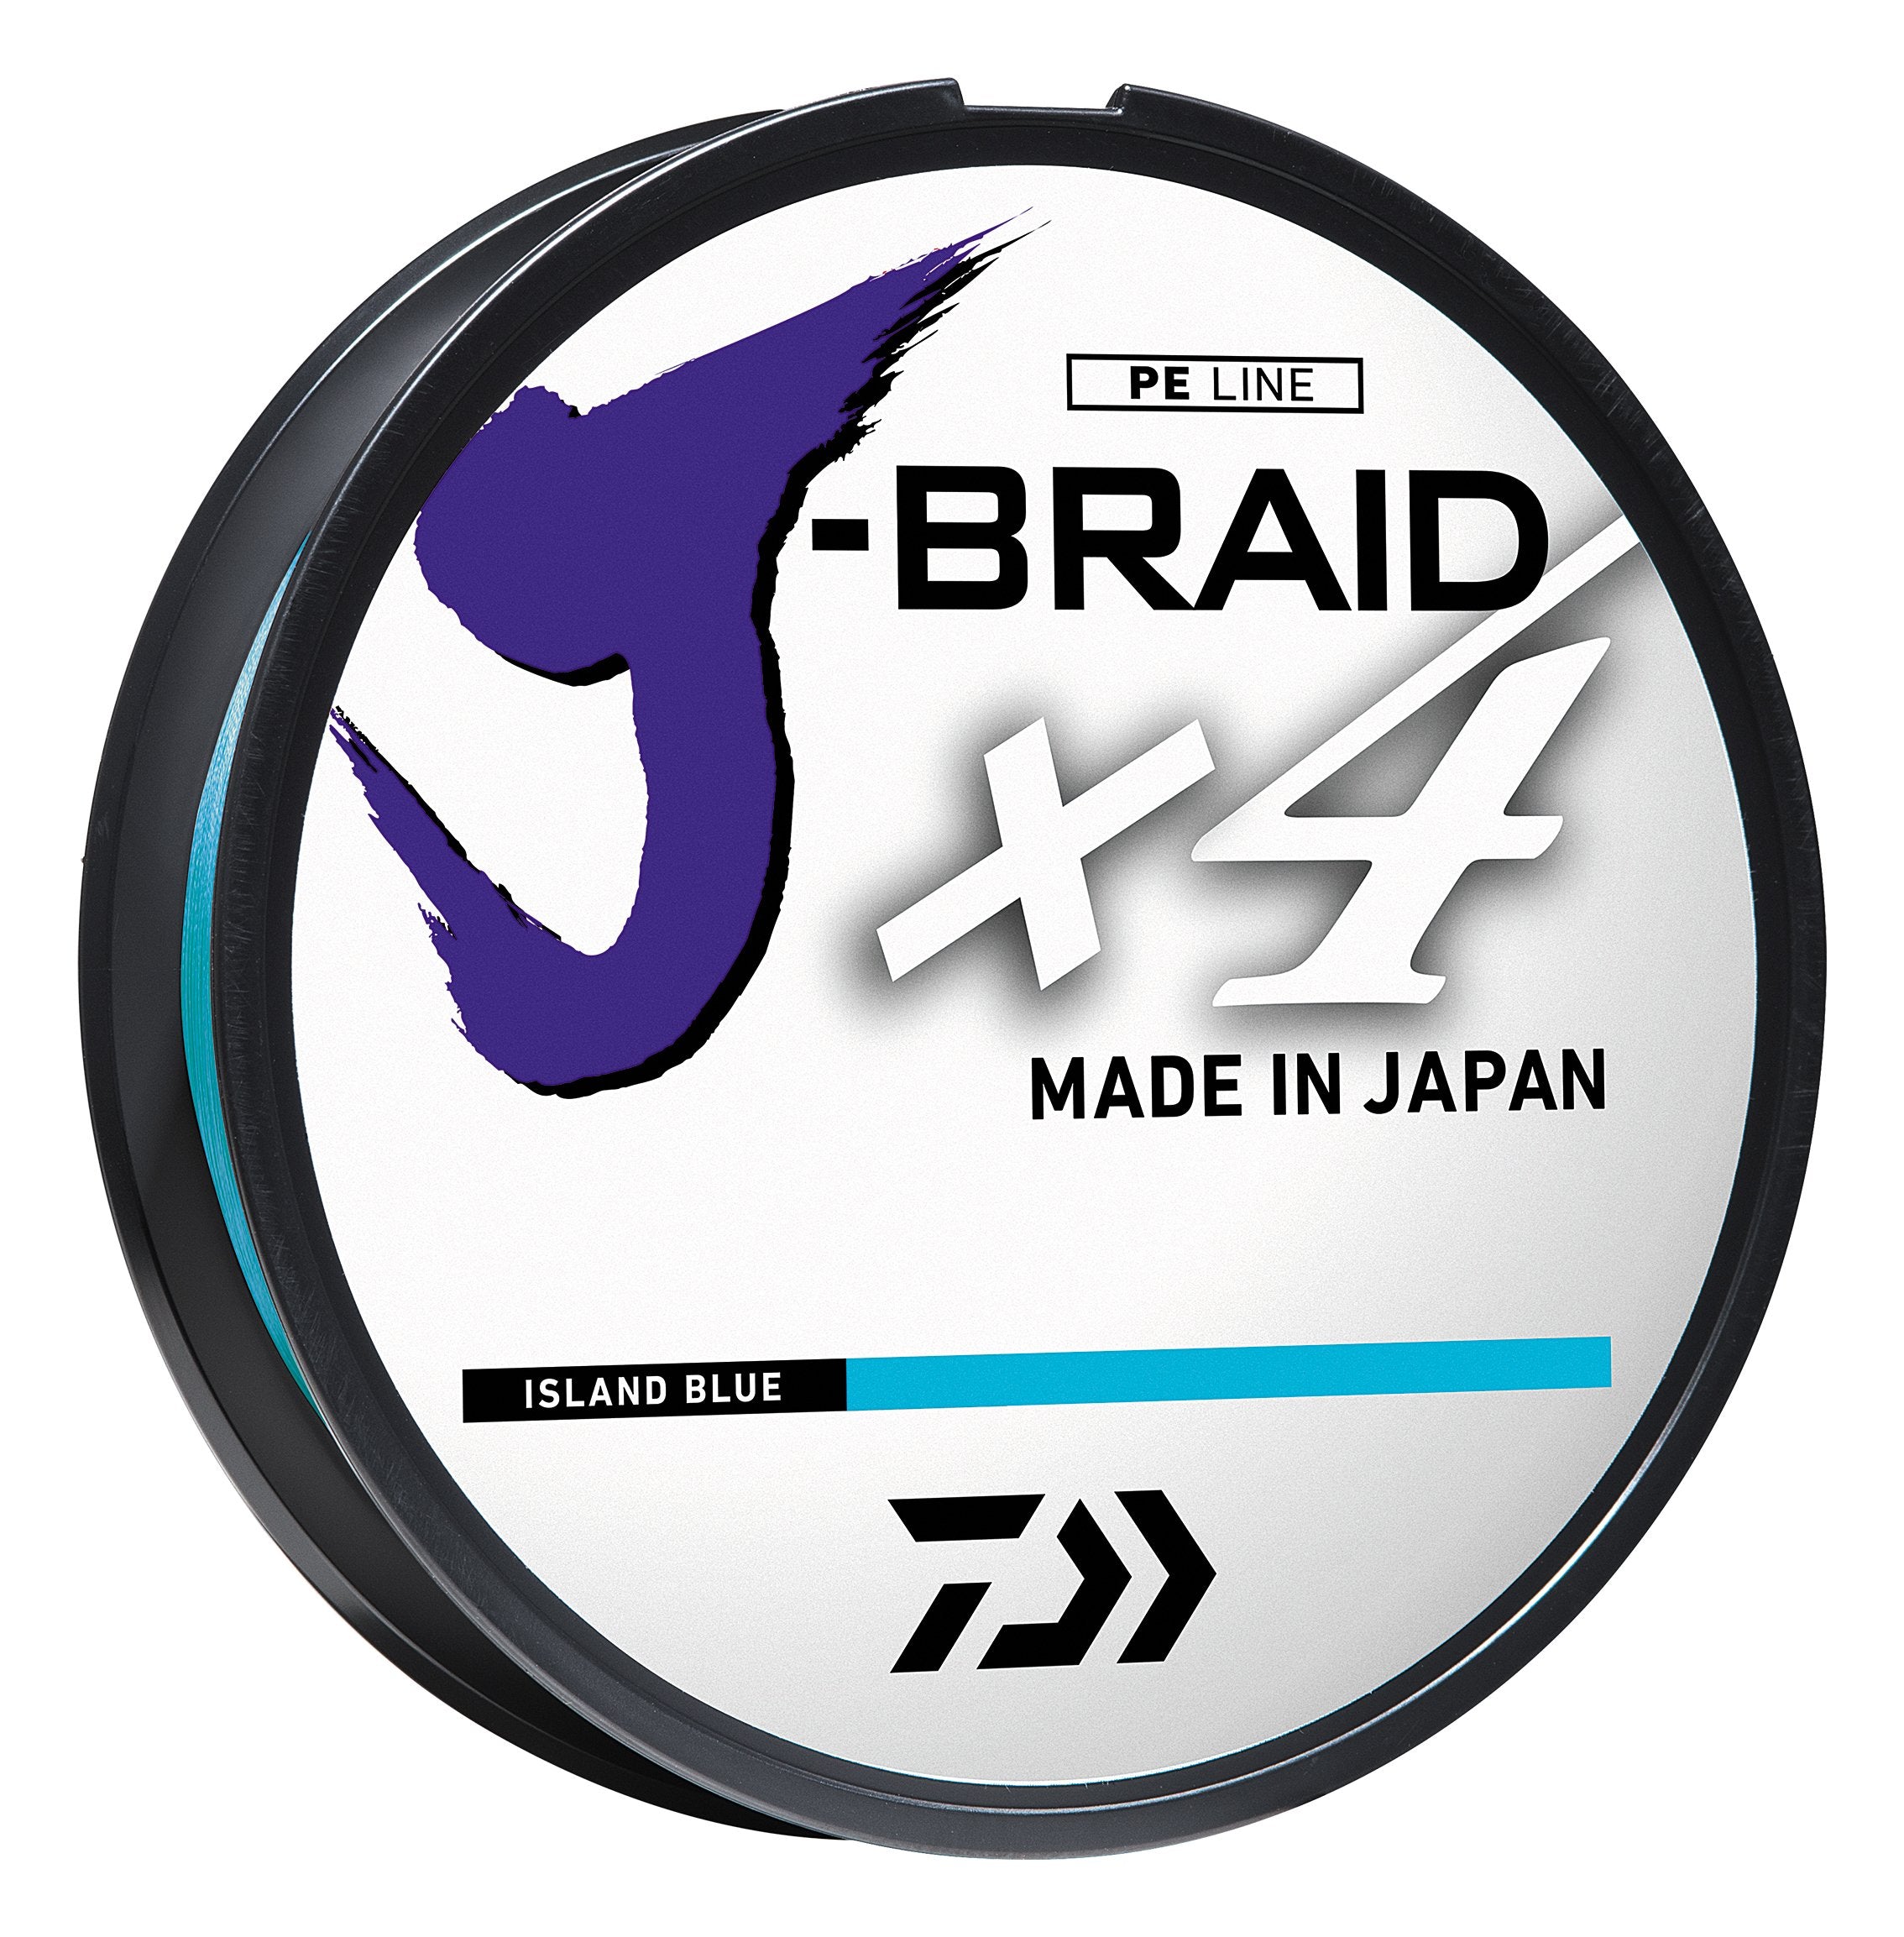 J-Braid x4 Braided Line - 3000 Yards, 50 lbs Tested, .013 Diameter, Island Blue